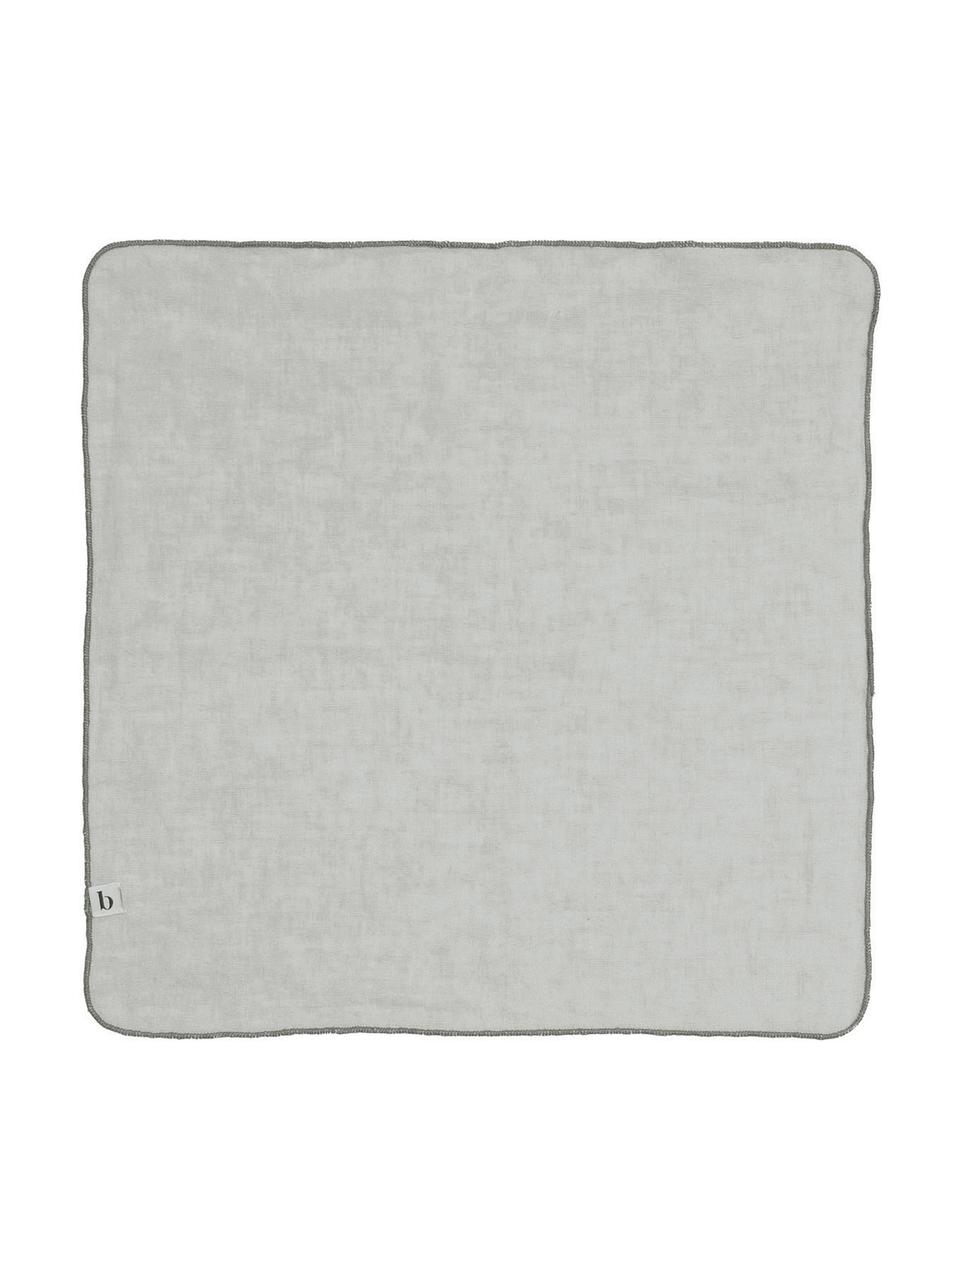 Leinen-Servietten Gracie mit Hohlsaum, 2 Stück, 100% Leinen, Grau, B 45 x L 45 cm